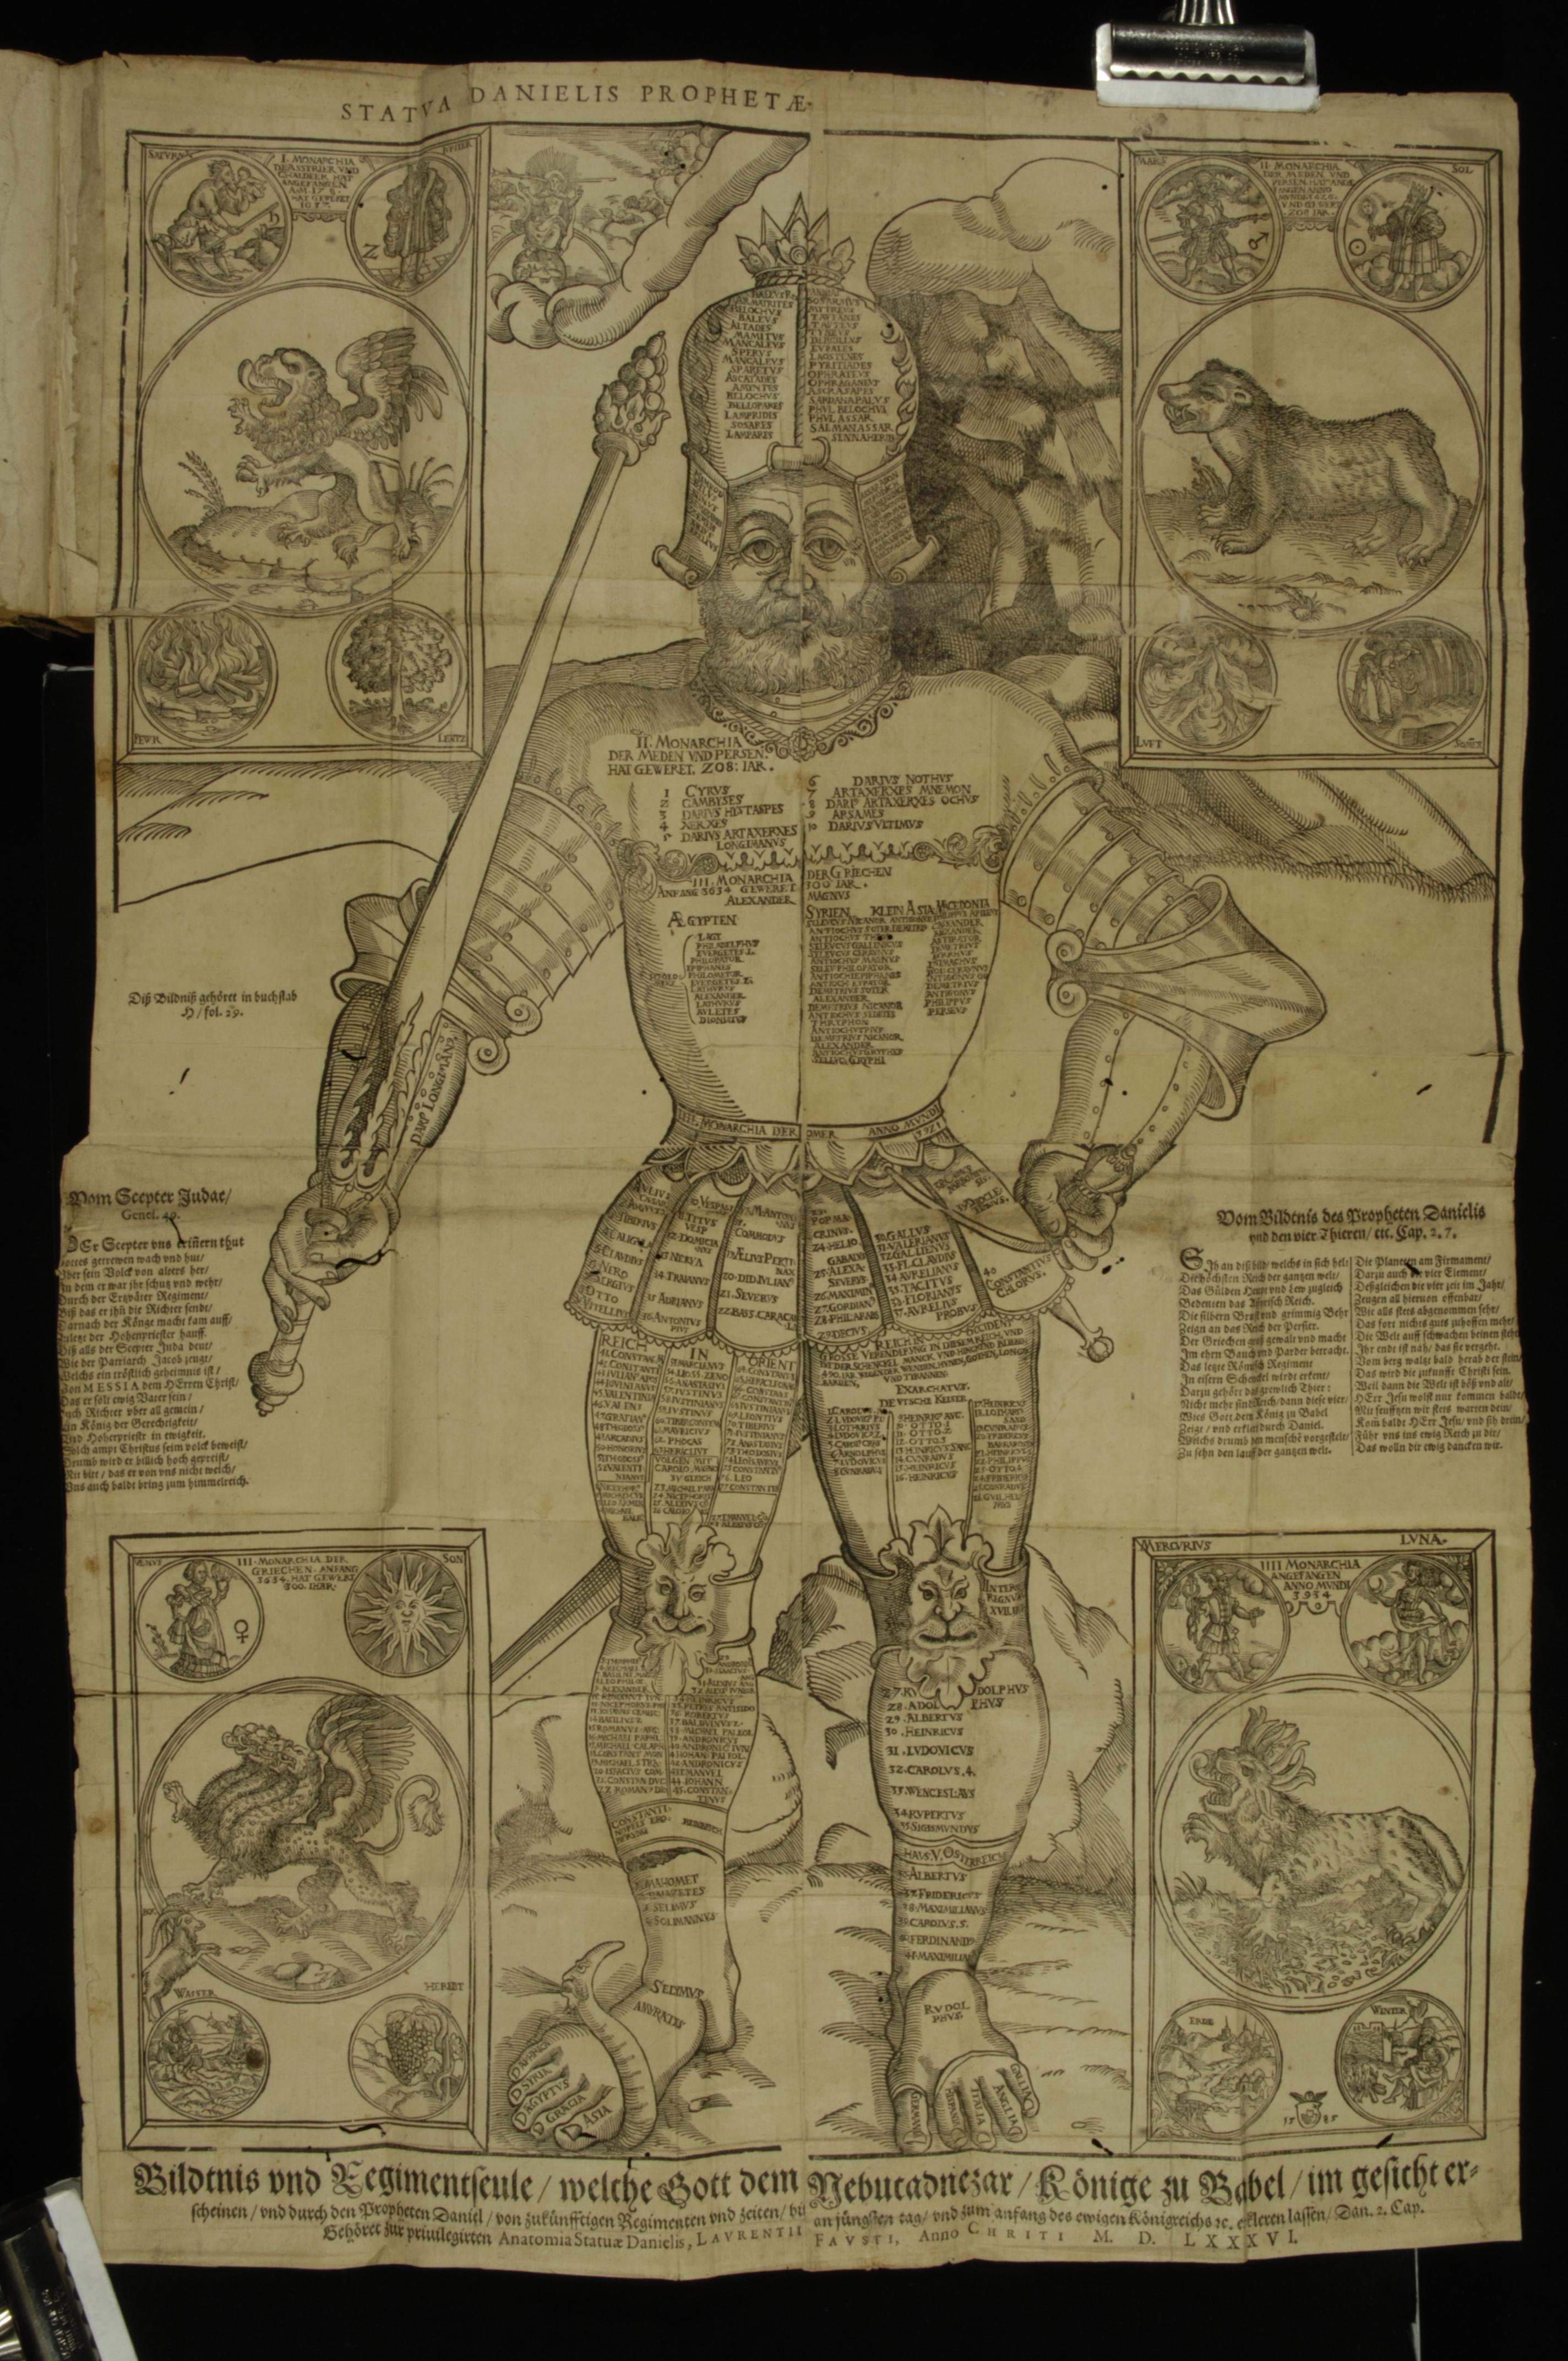 http://blogs.princeton.edu/rarebooks/images/1586_Anatomia_Statuae_Danielis.jpg